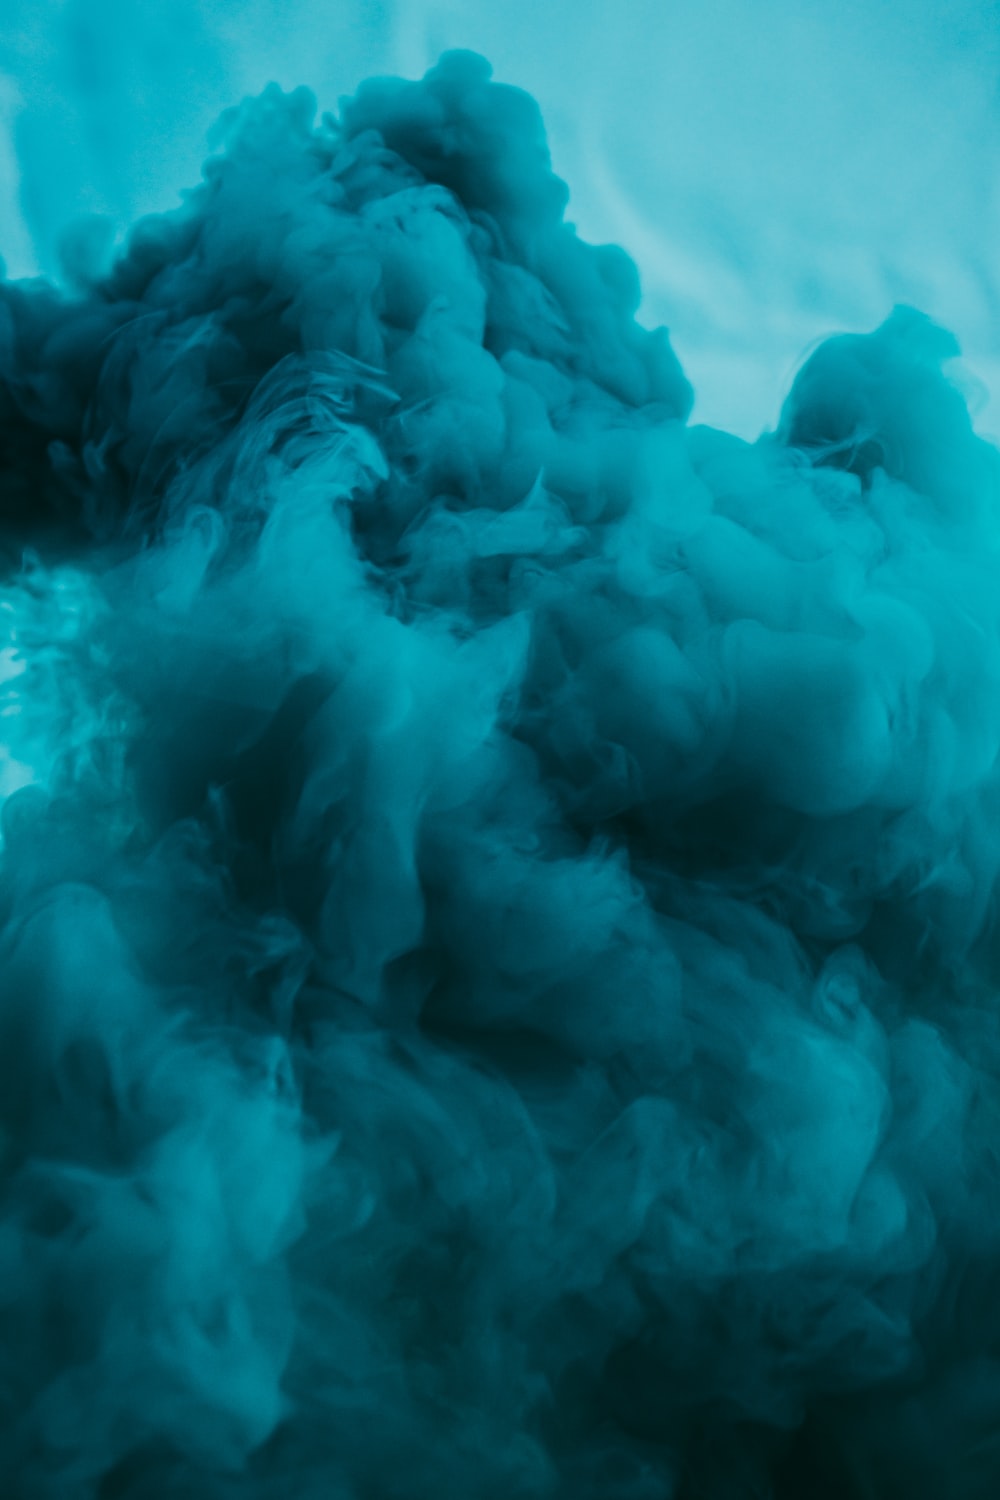 Aesthetic Blue Smoke Wallpapers